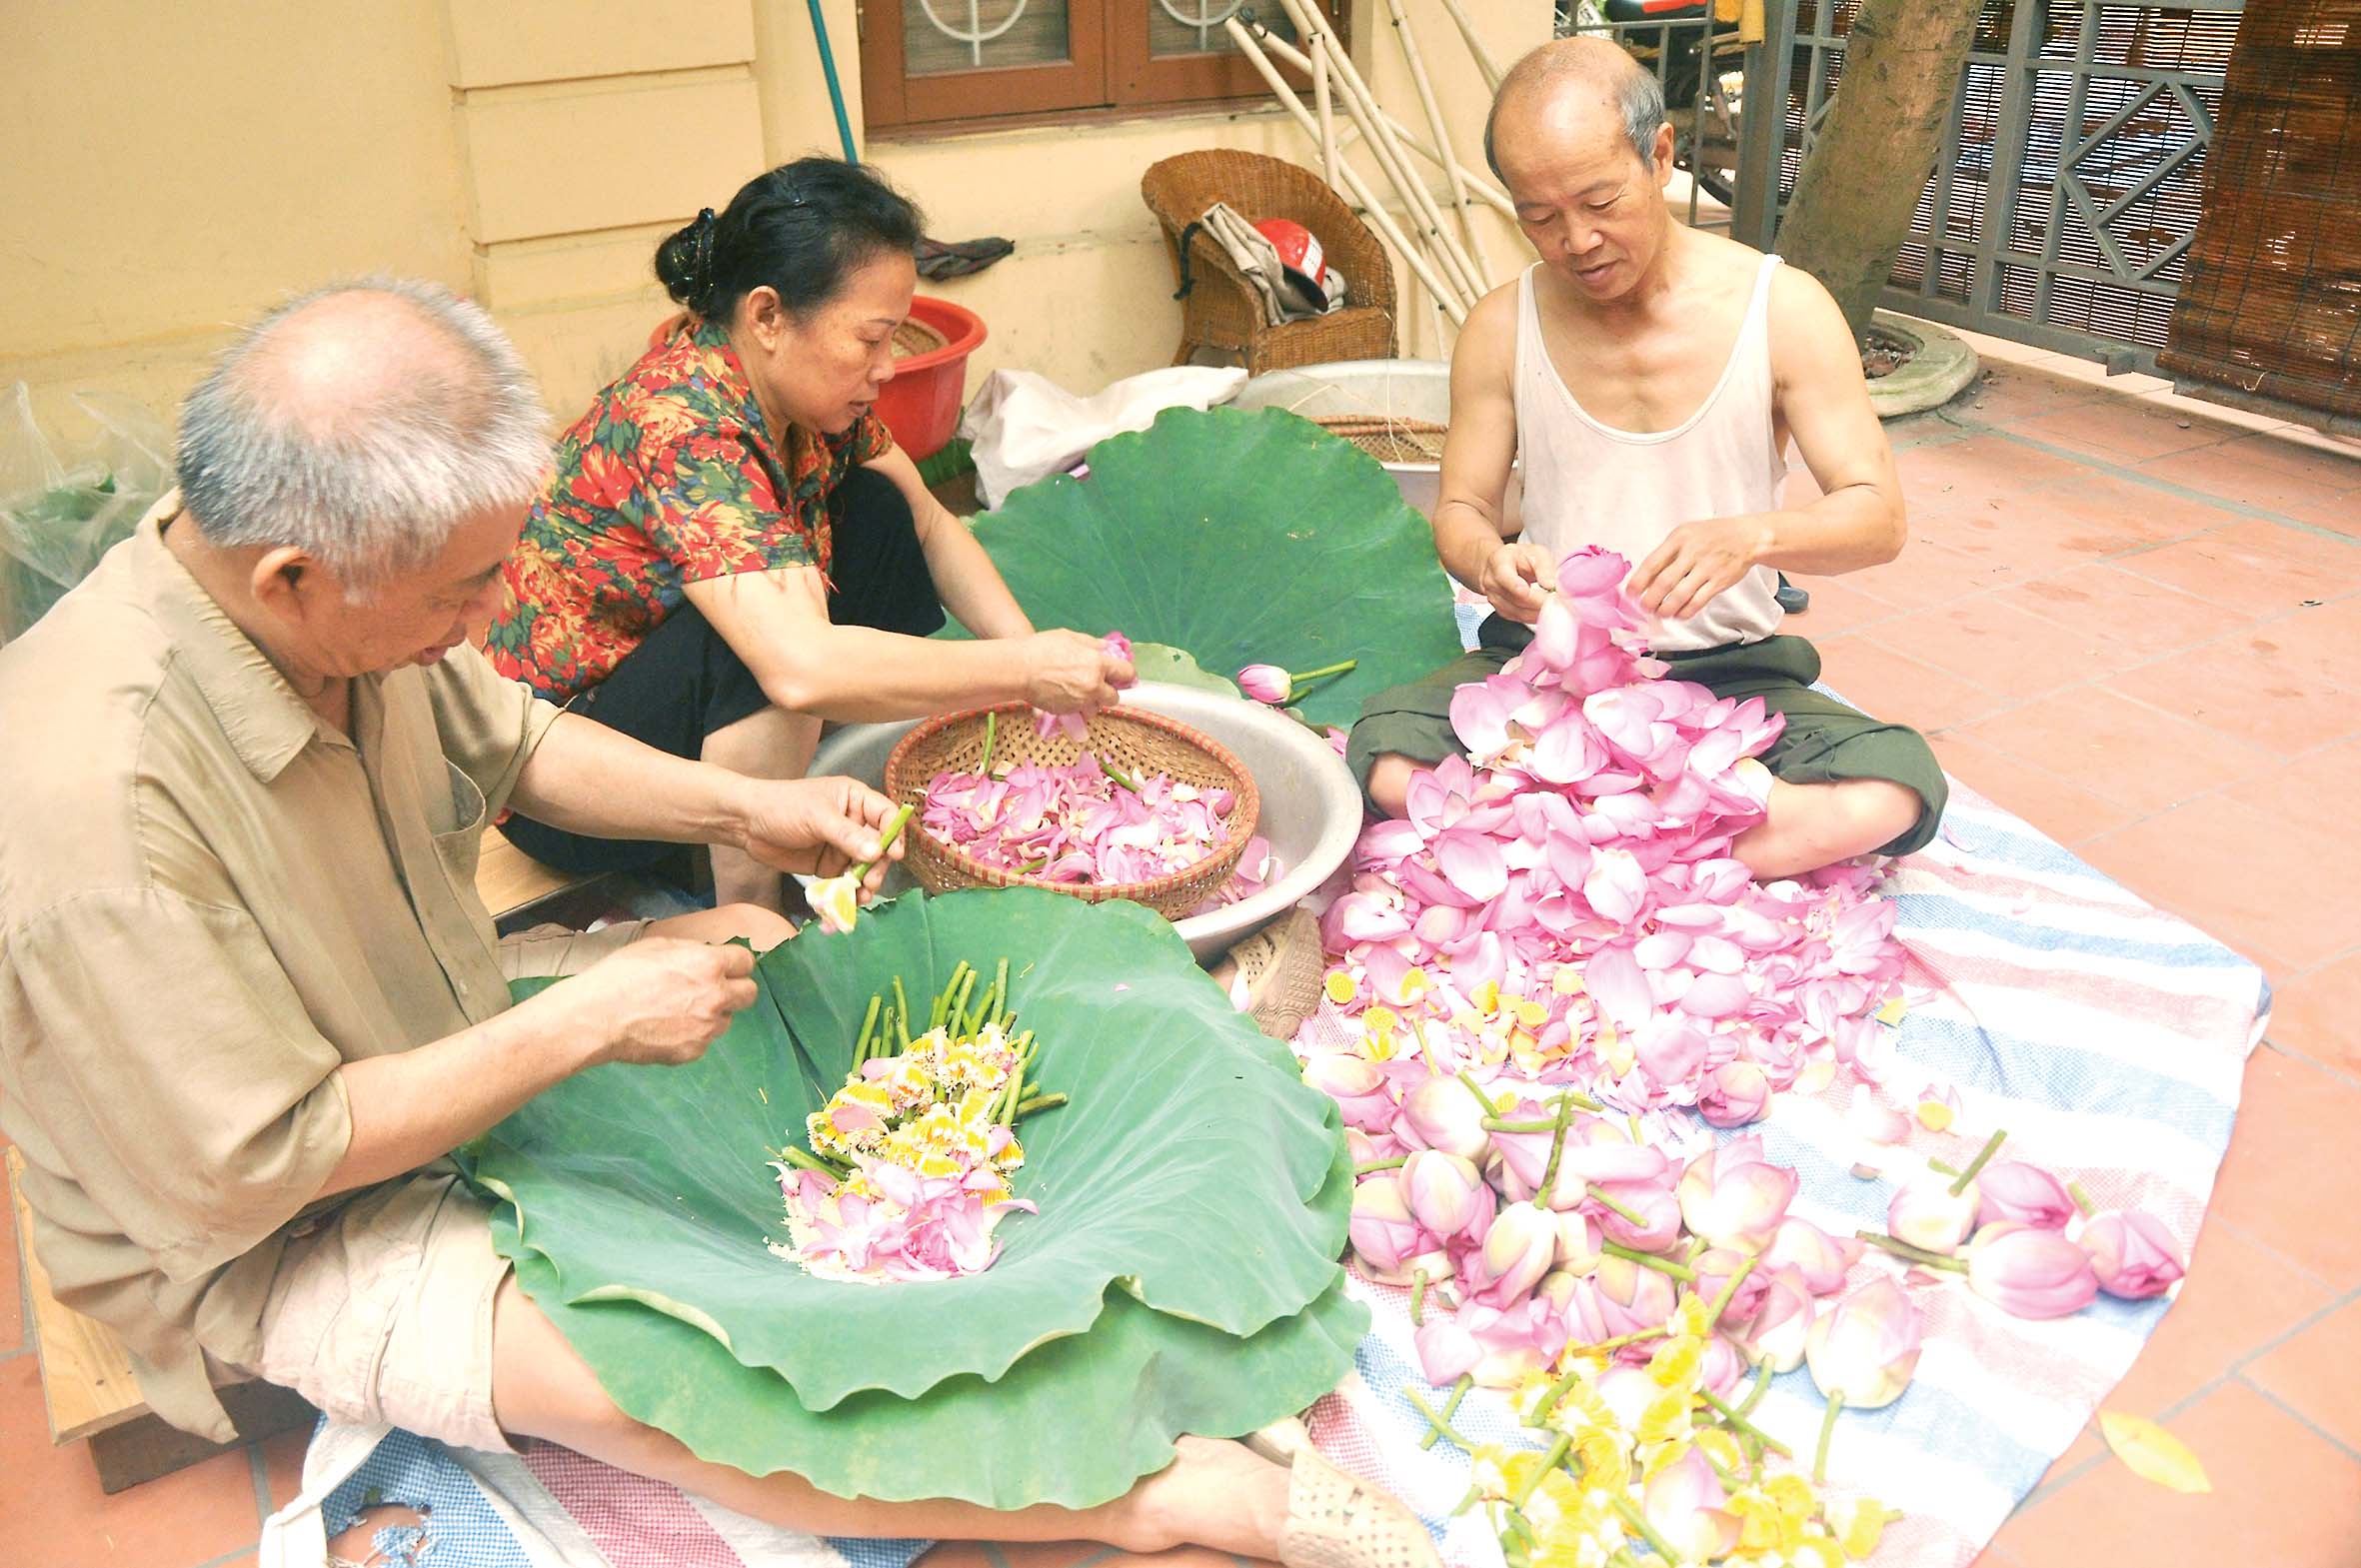 The dying art of embalming tea with lotus scent in Vietnam’s capital